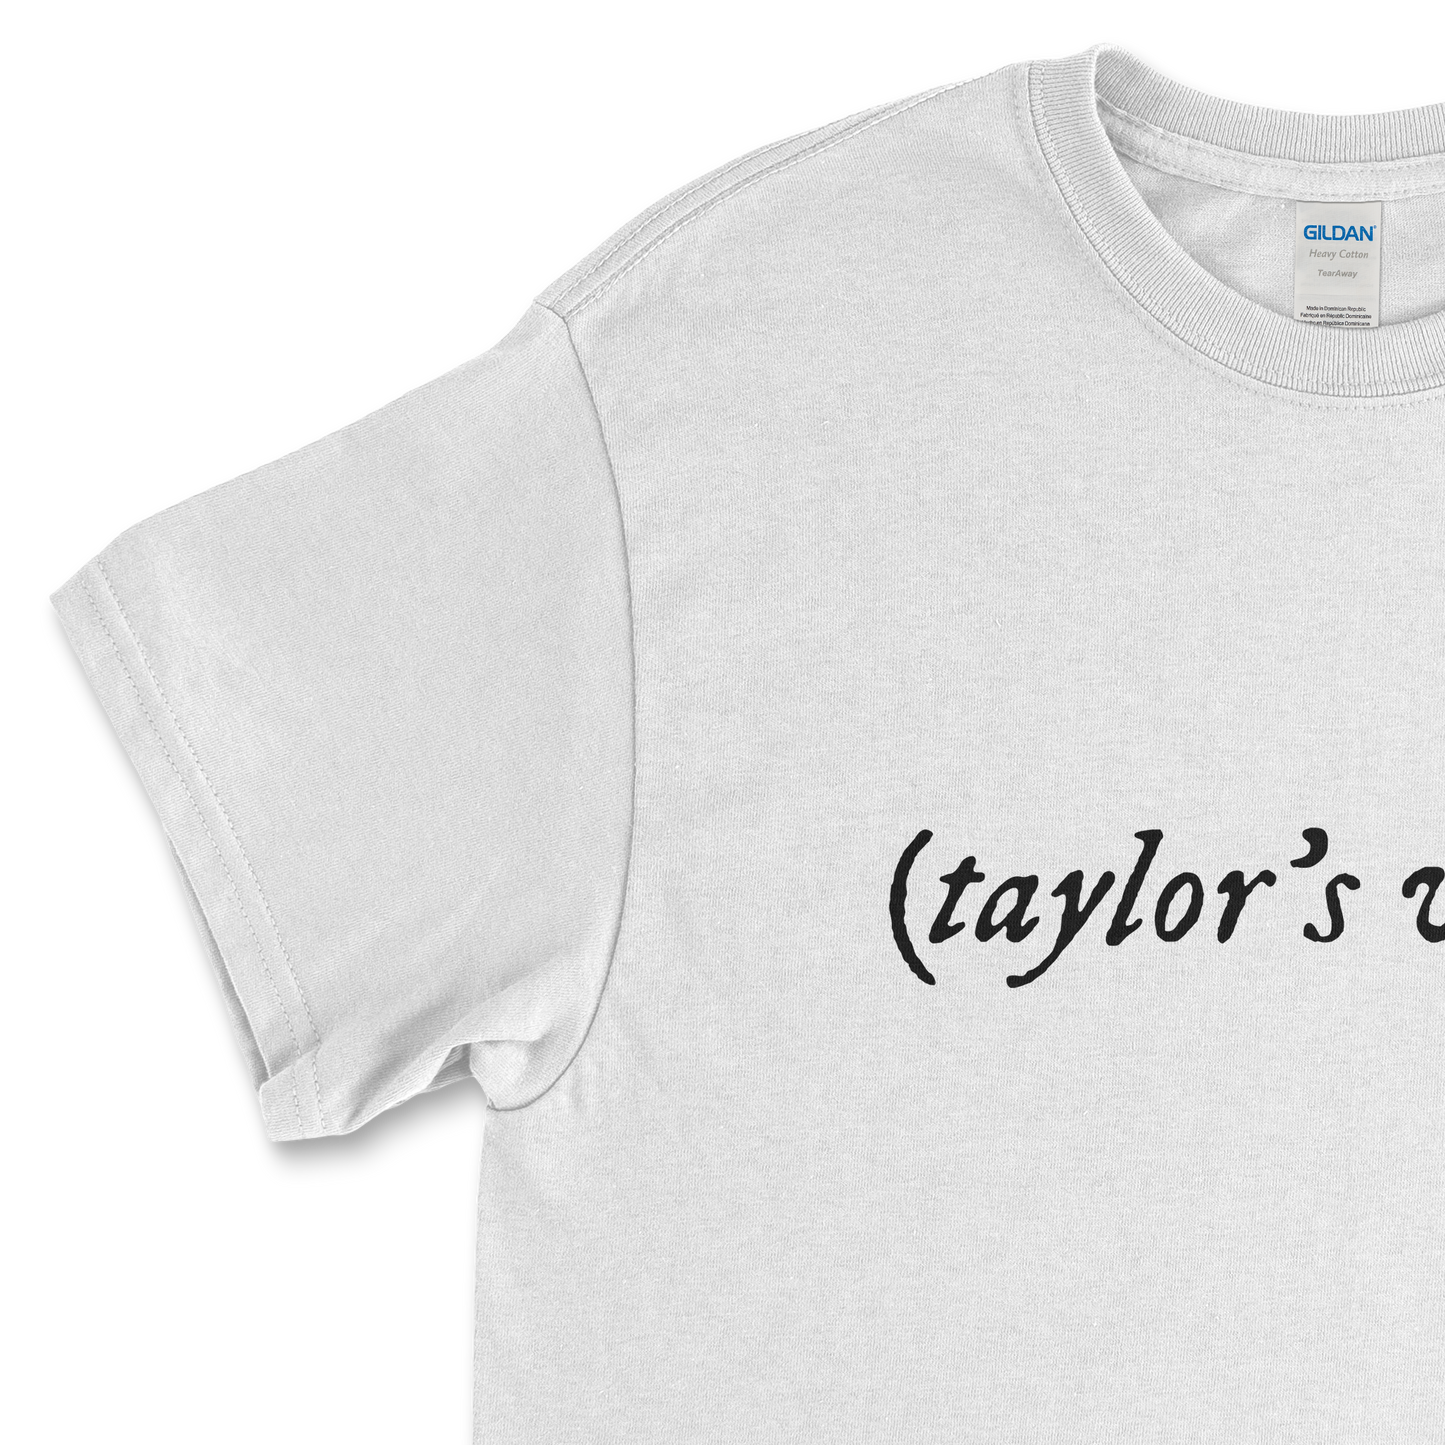 taylor's version T-Shirt